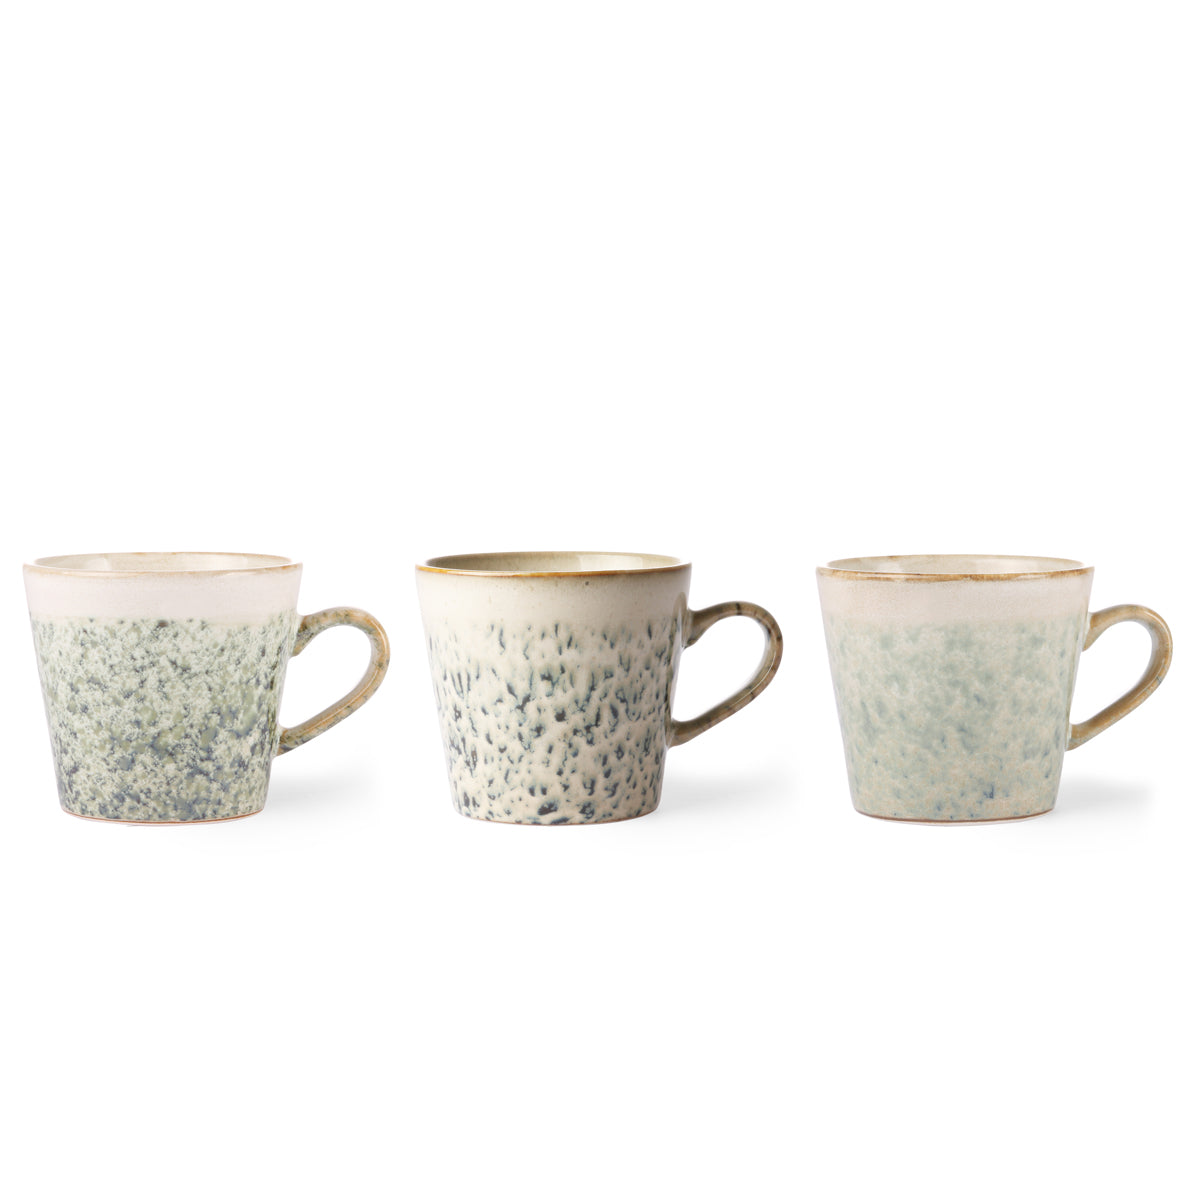 70s Ceramics Cappuccino Mug: Hail